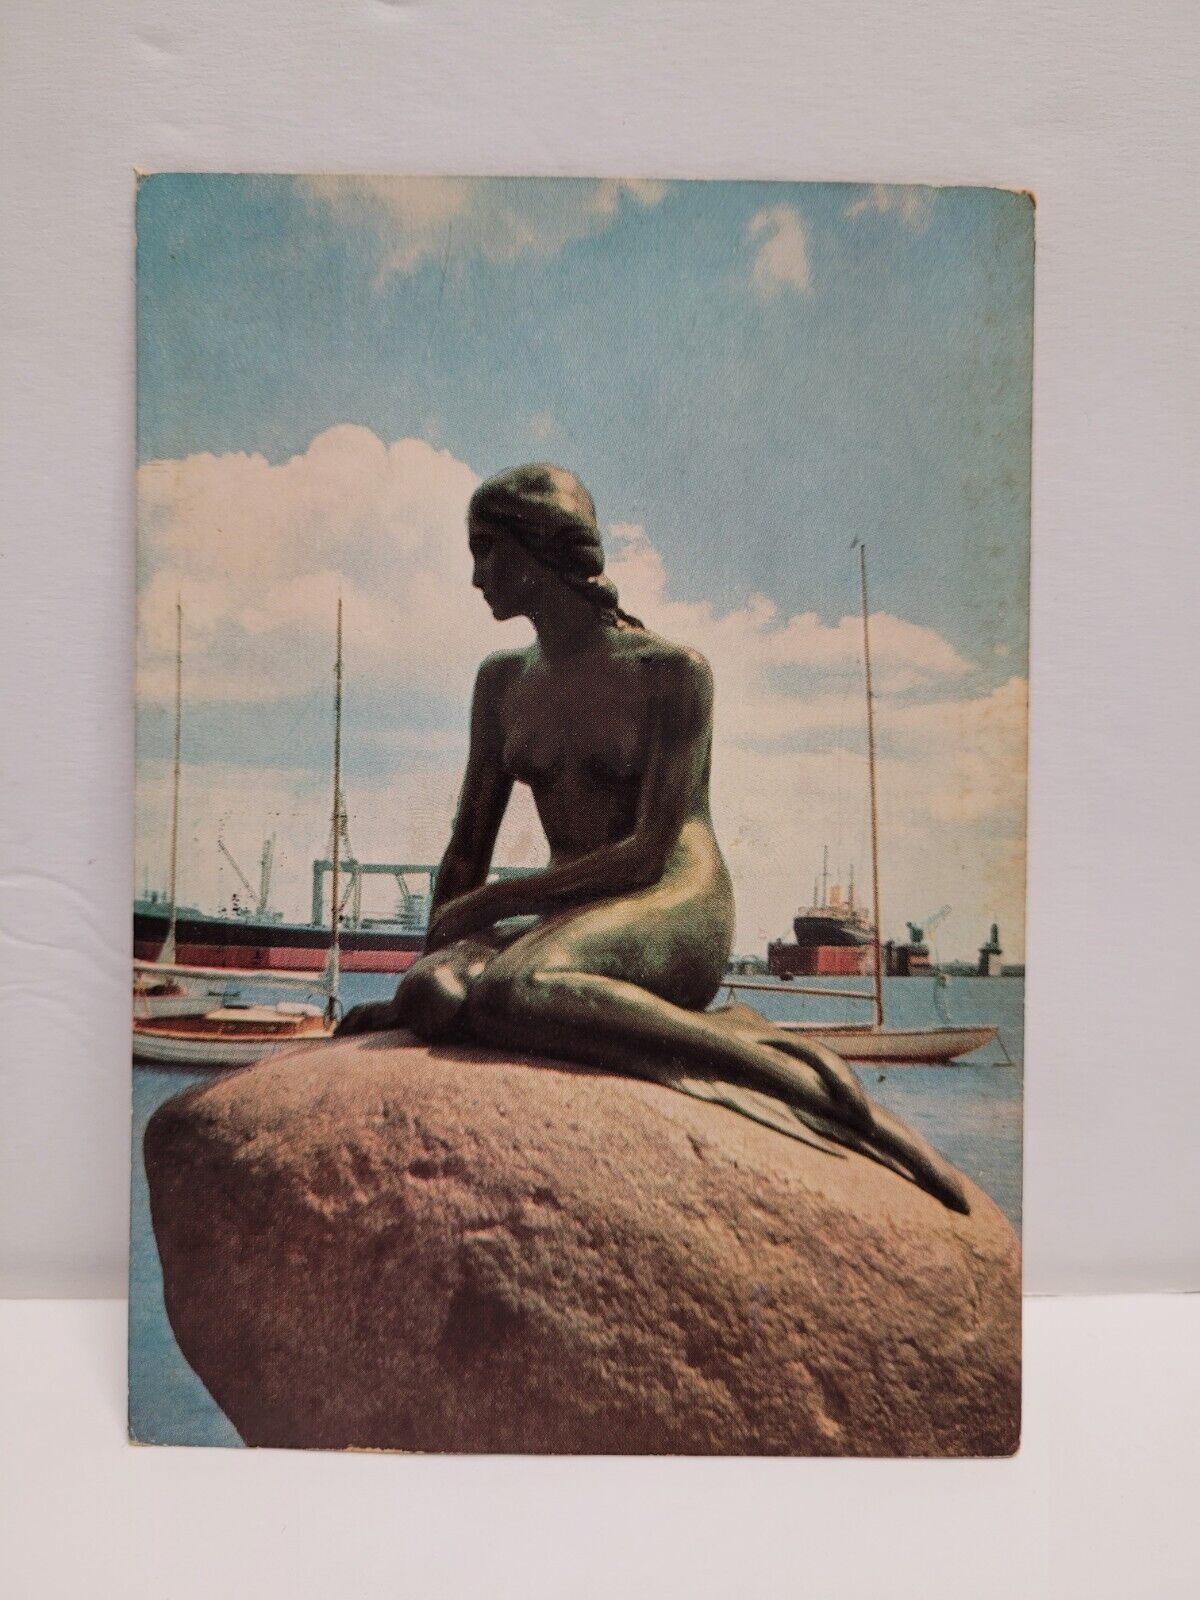 Vintage Used Postcard 1955 The Little Mermaid Copenhagen, Denmark 